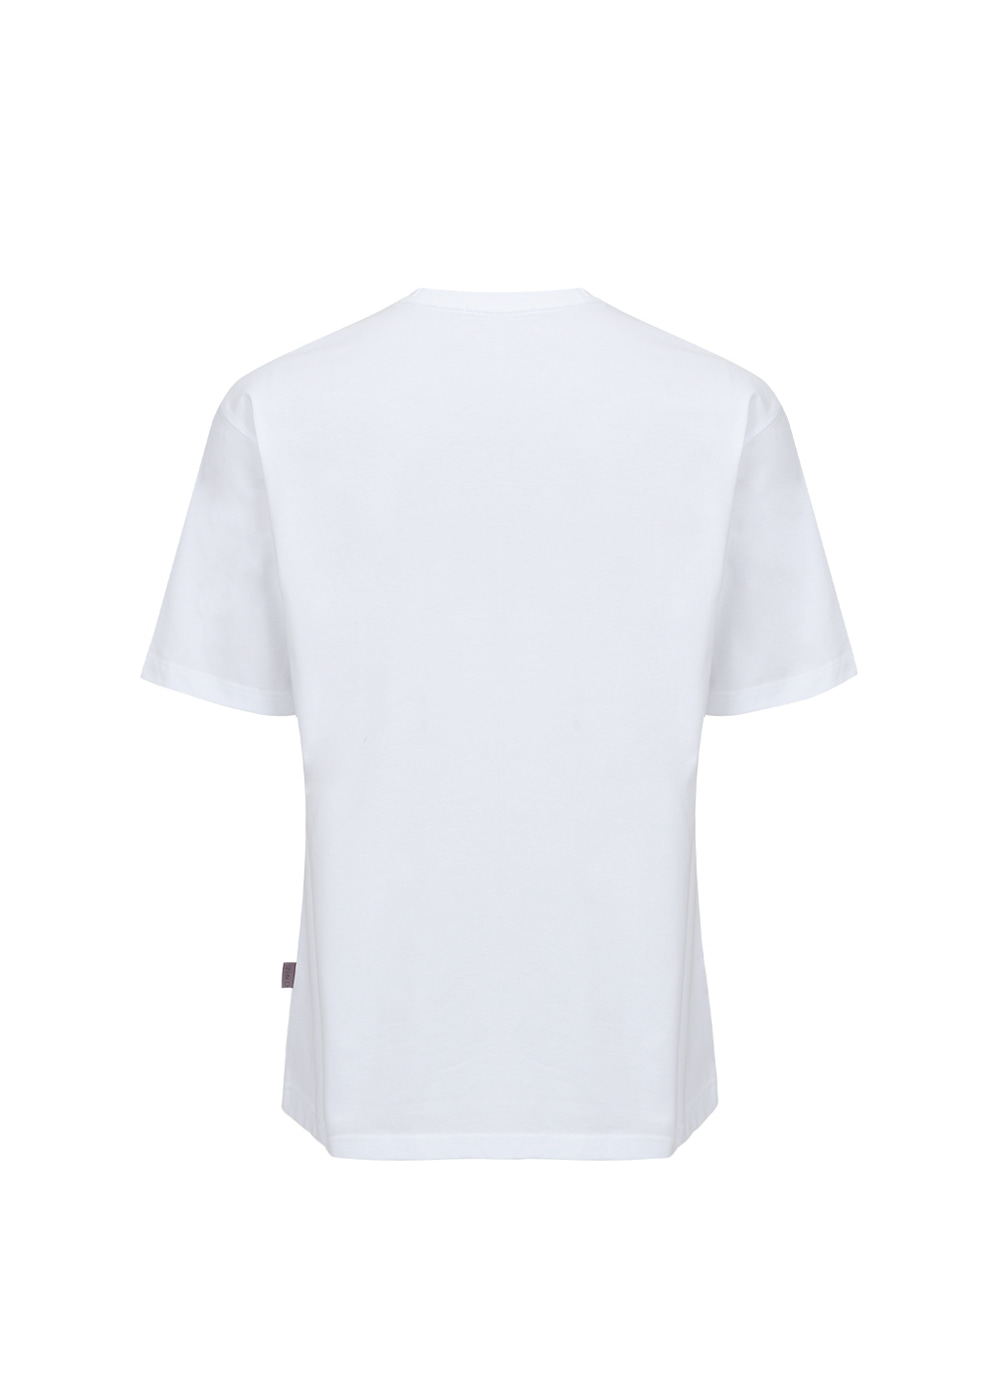 CHARMS Signature T-shirt - WHITE